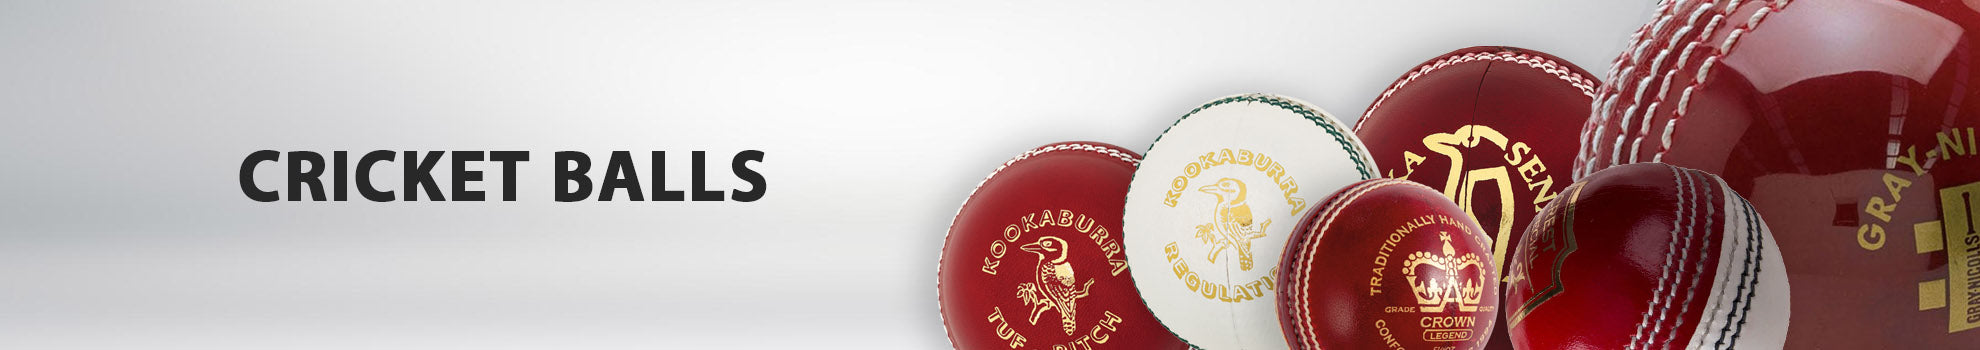 Buy Kookaburra Premium Cricket Balls in Australia | Stag Sports